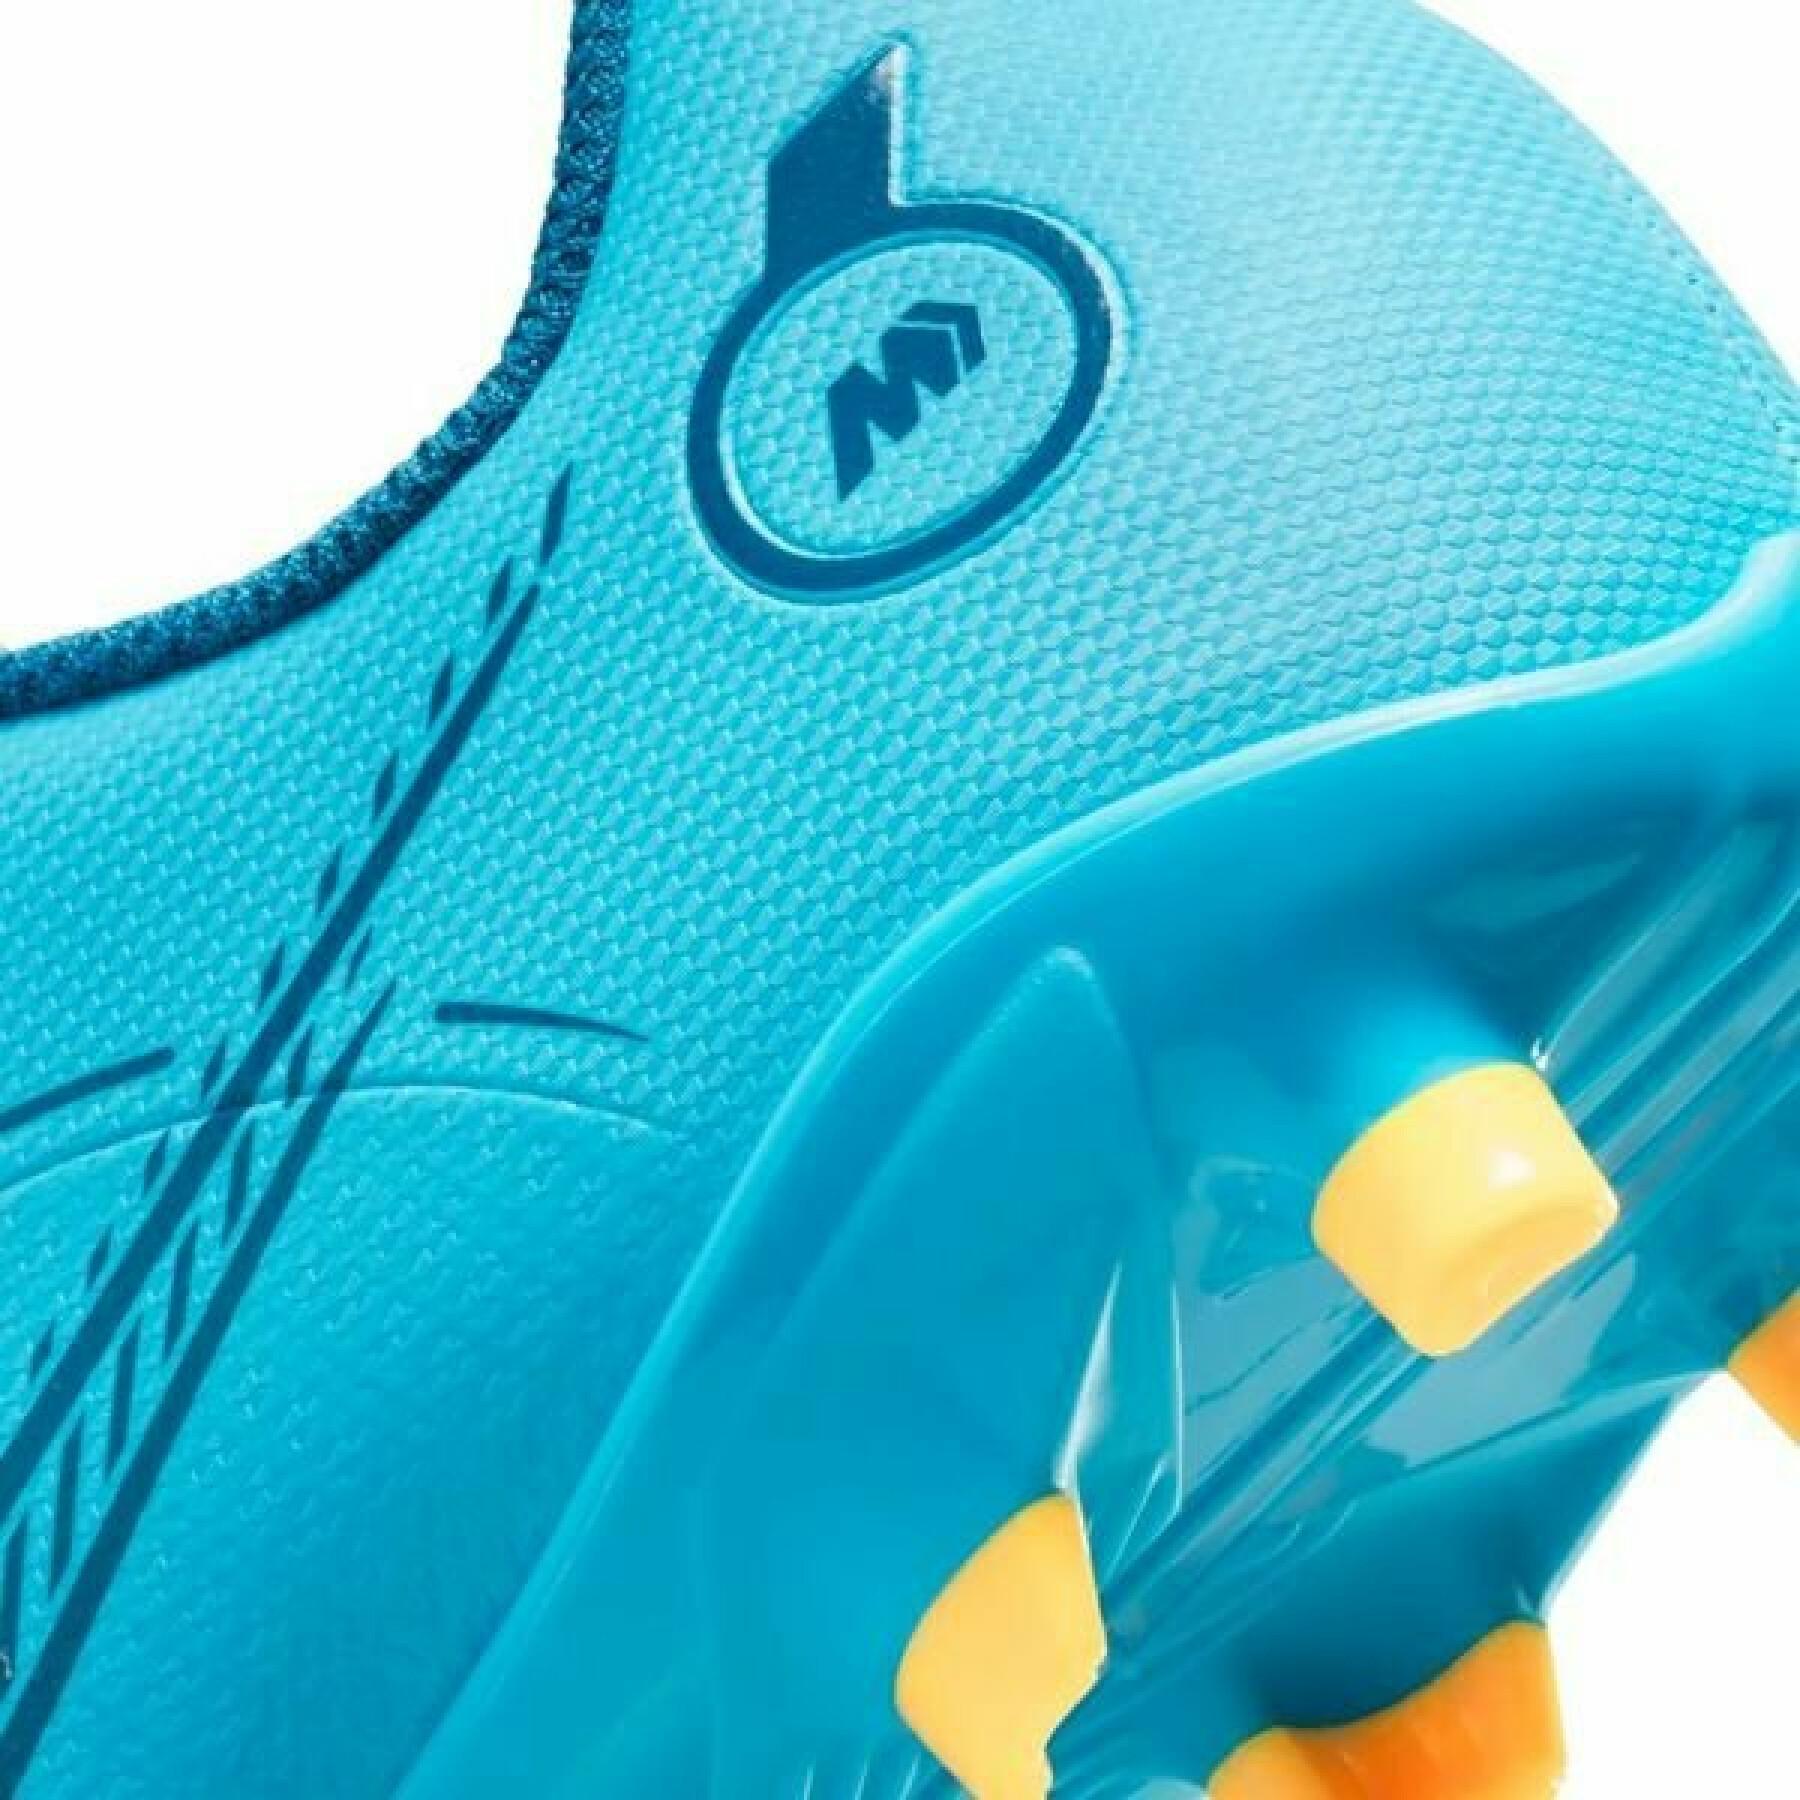 Chaussures de football enfant Nike Jr Vapor 14 club FG/MG -Blueprint Pack